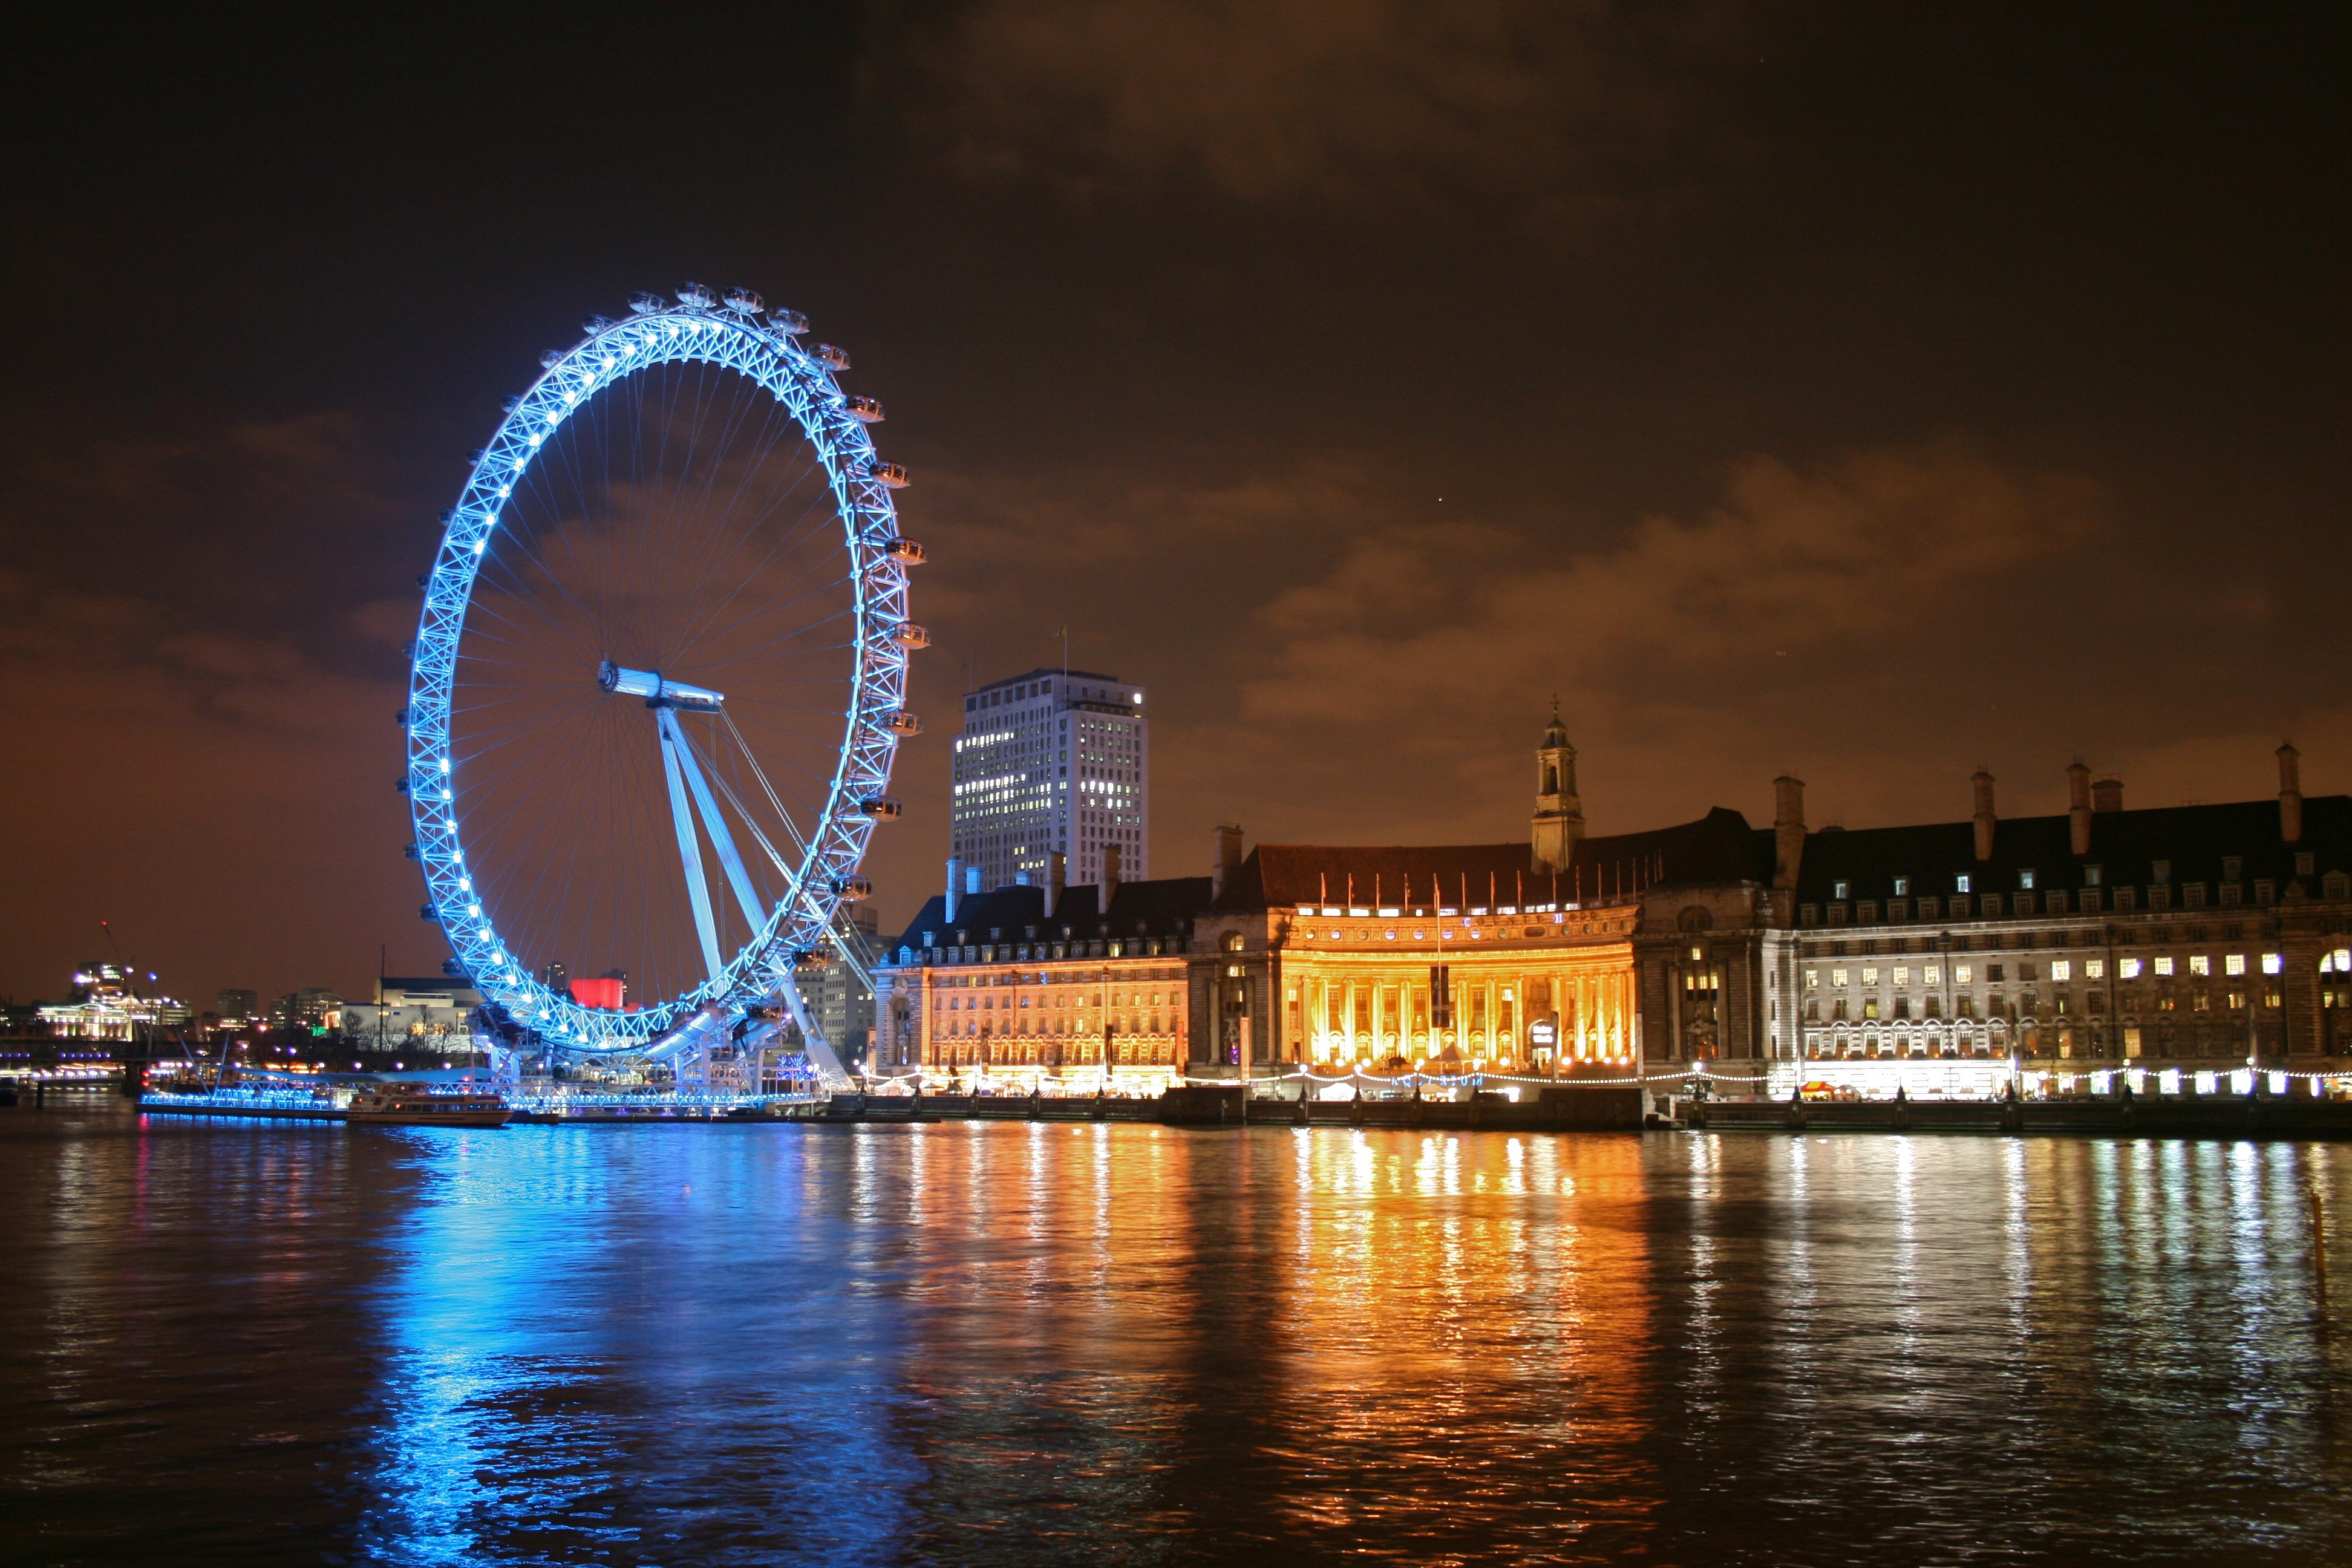 London Eye at night 2.jpg